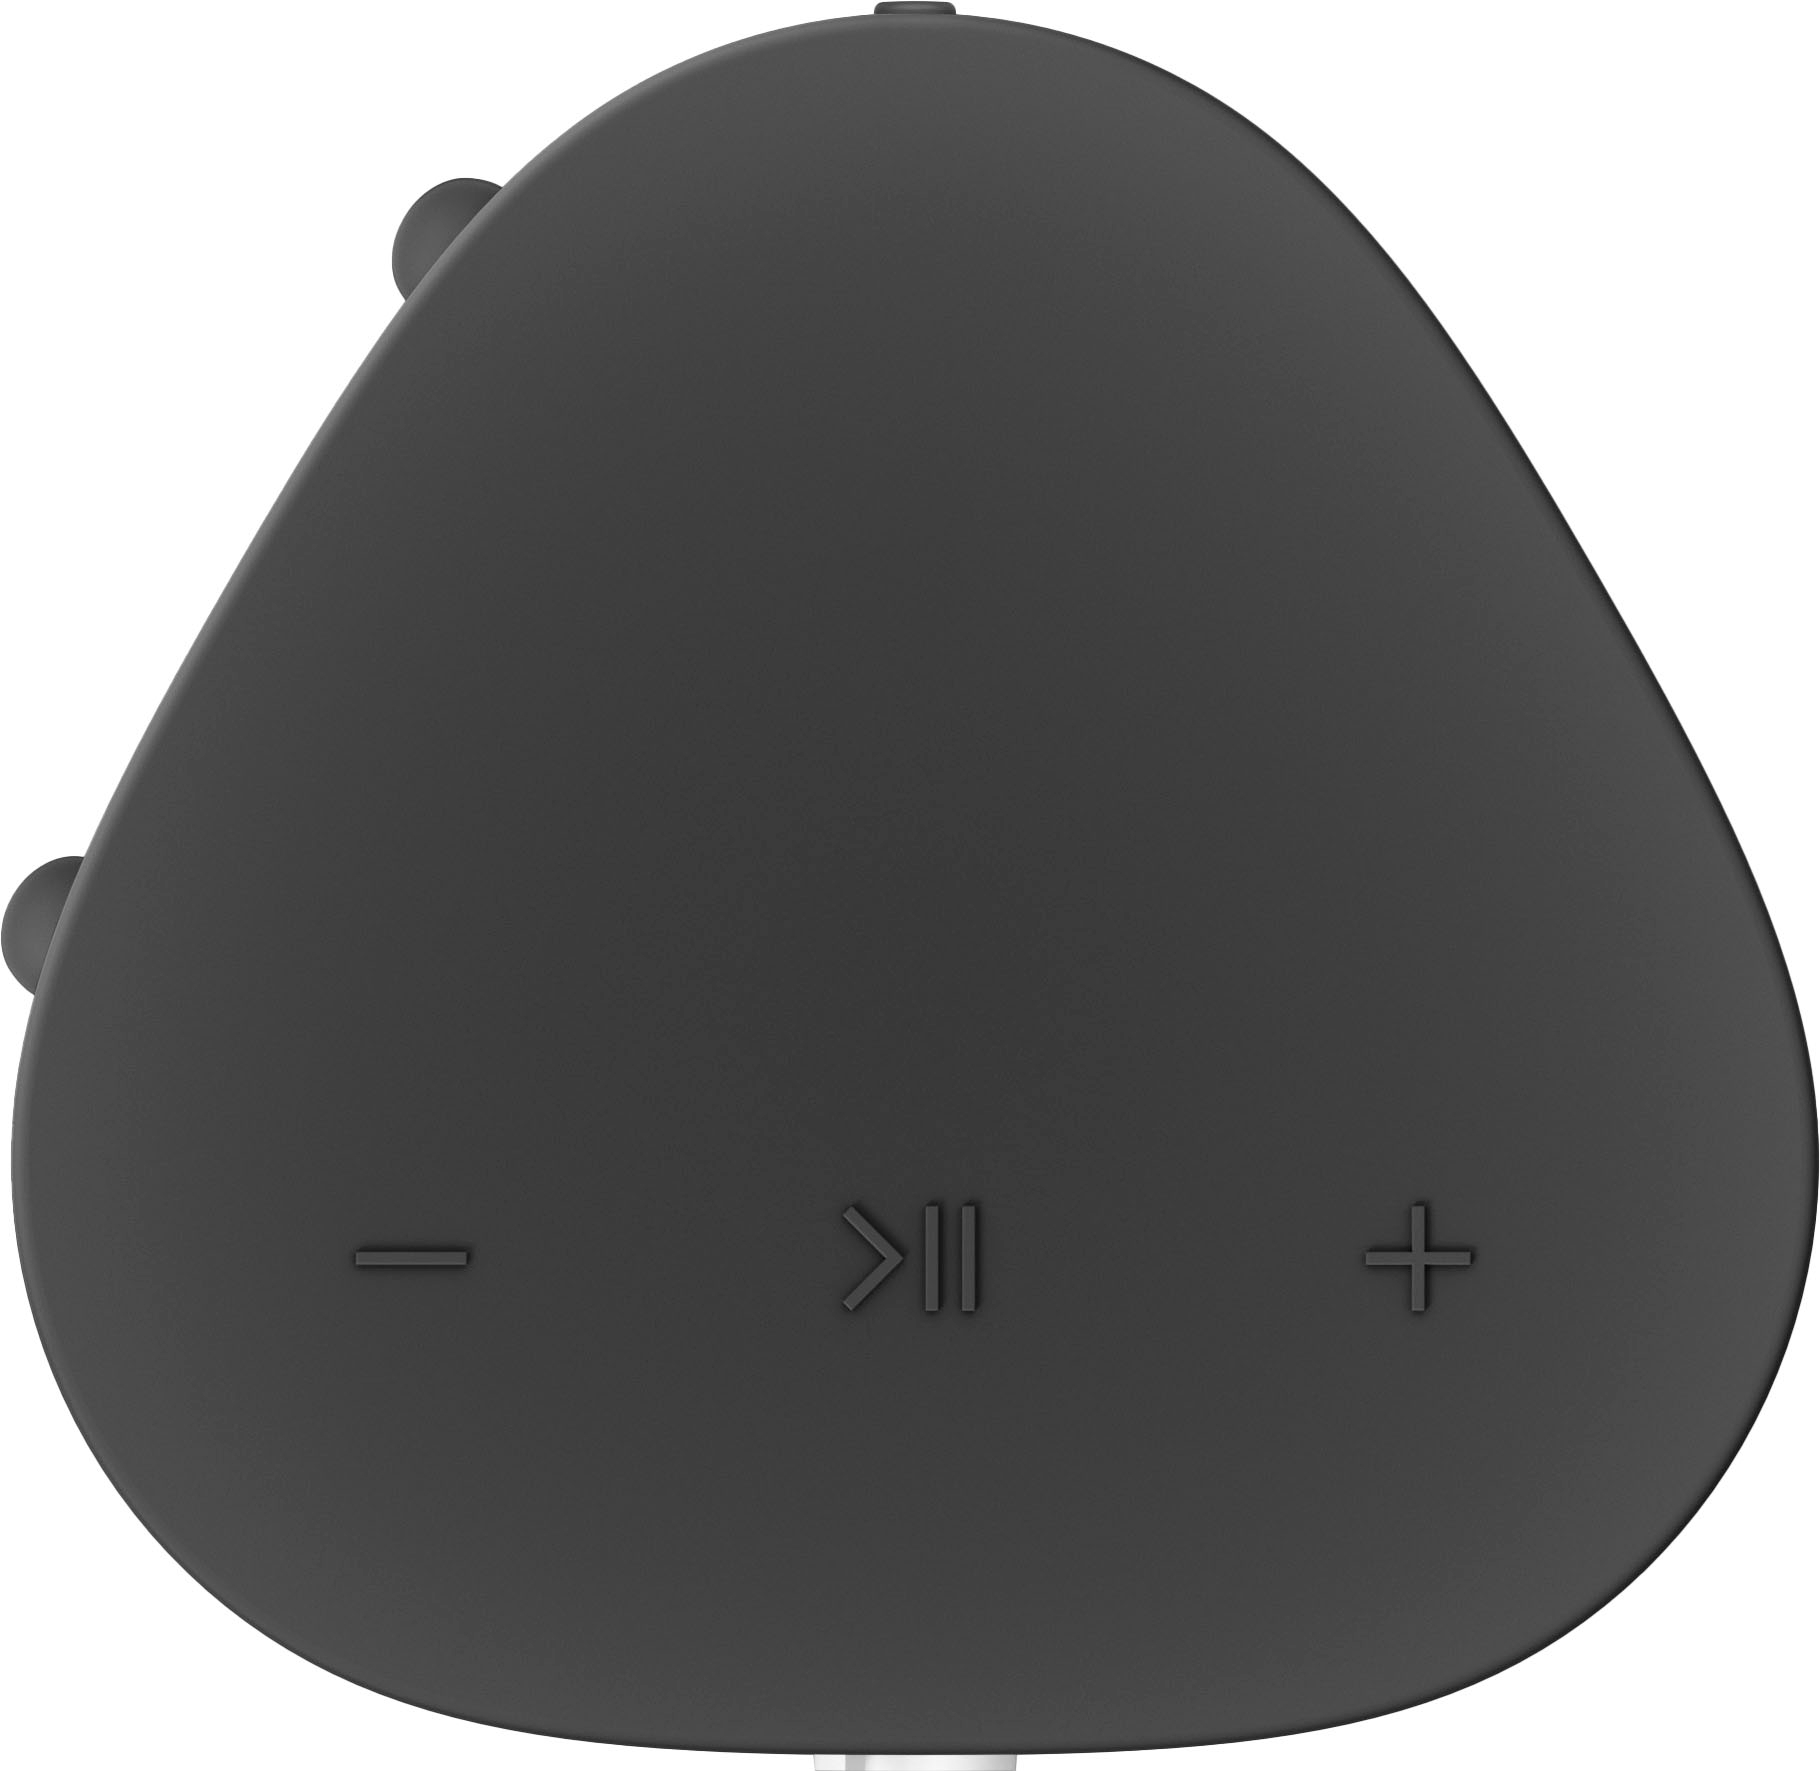 Sonos Roam SL Portable Bluetooth Wireless Speaker Shadow Black 